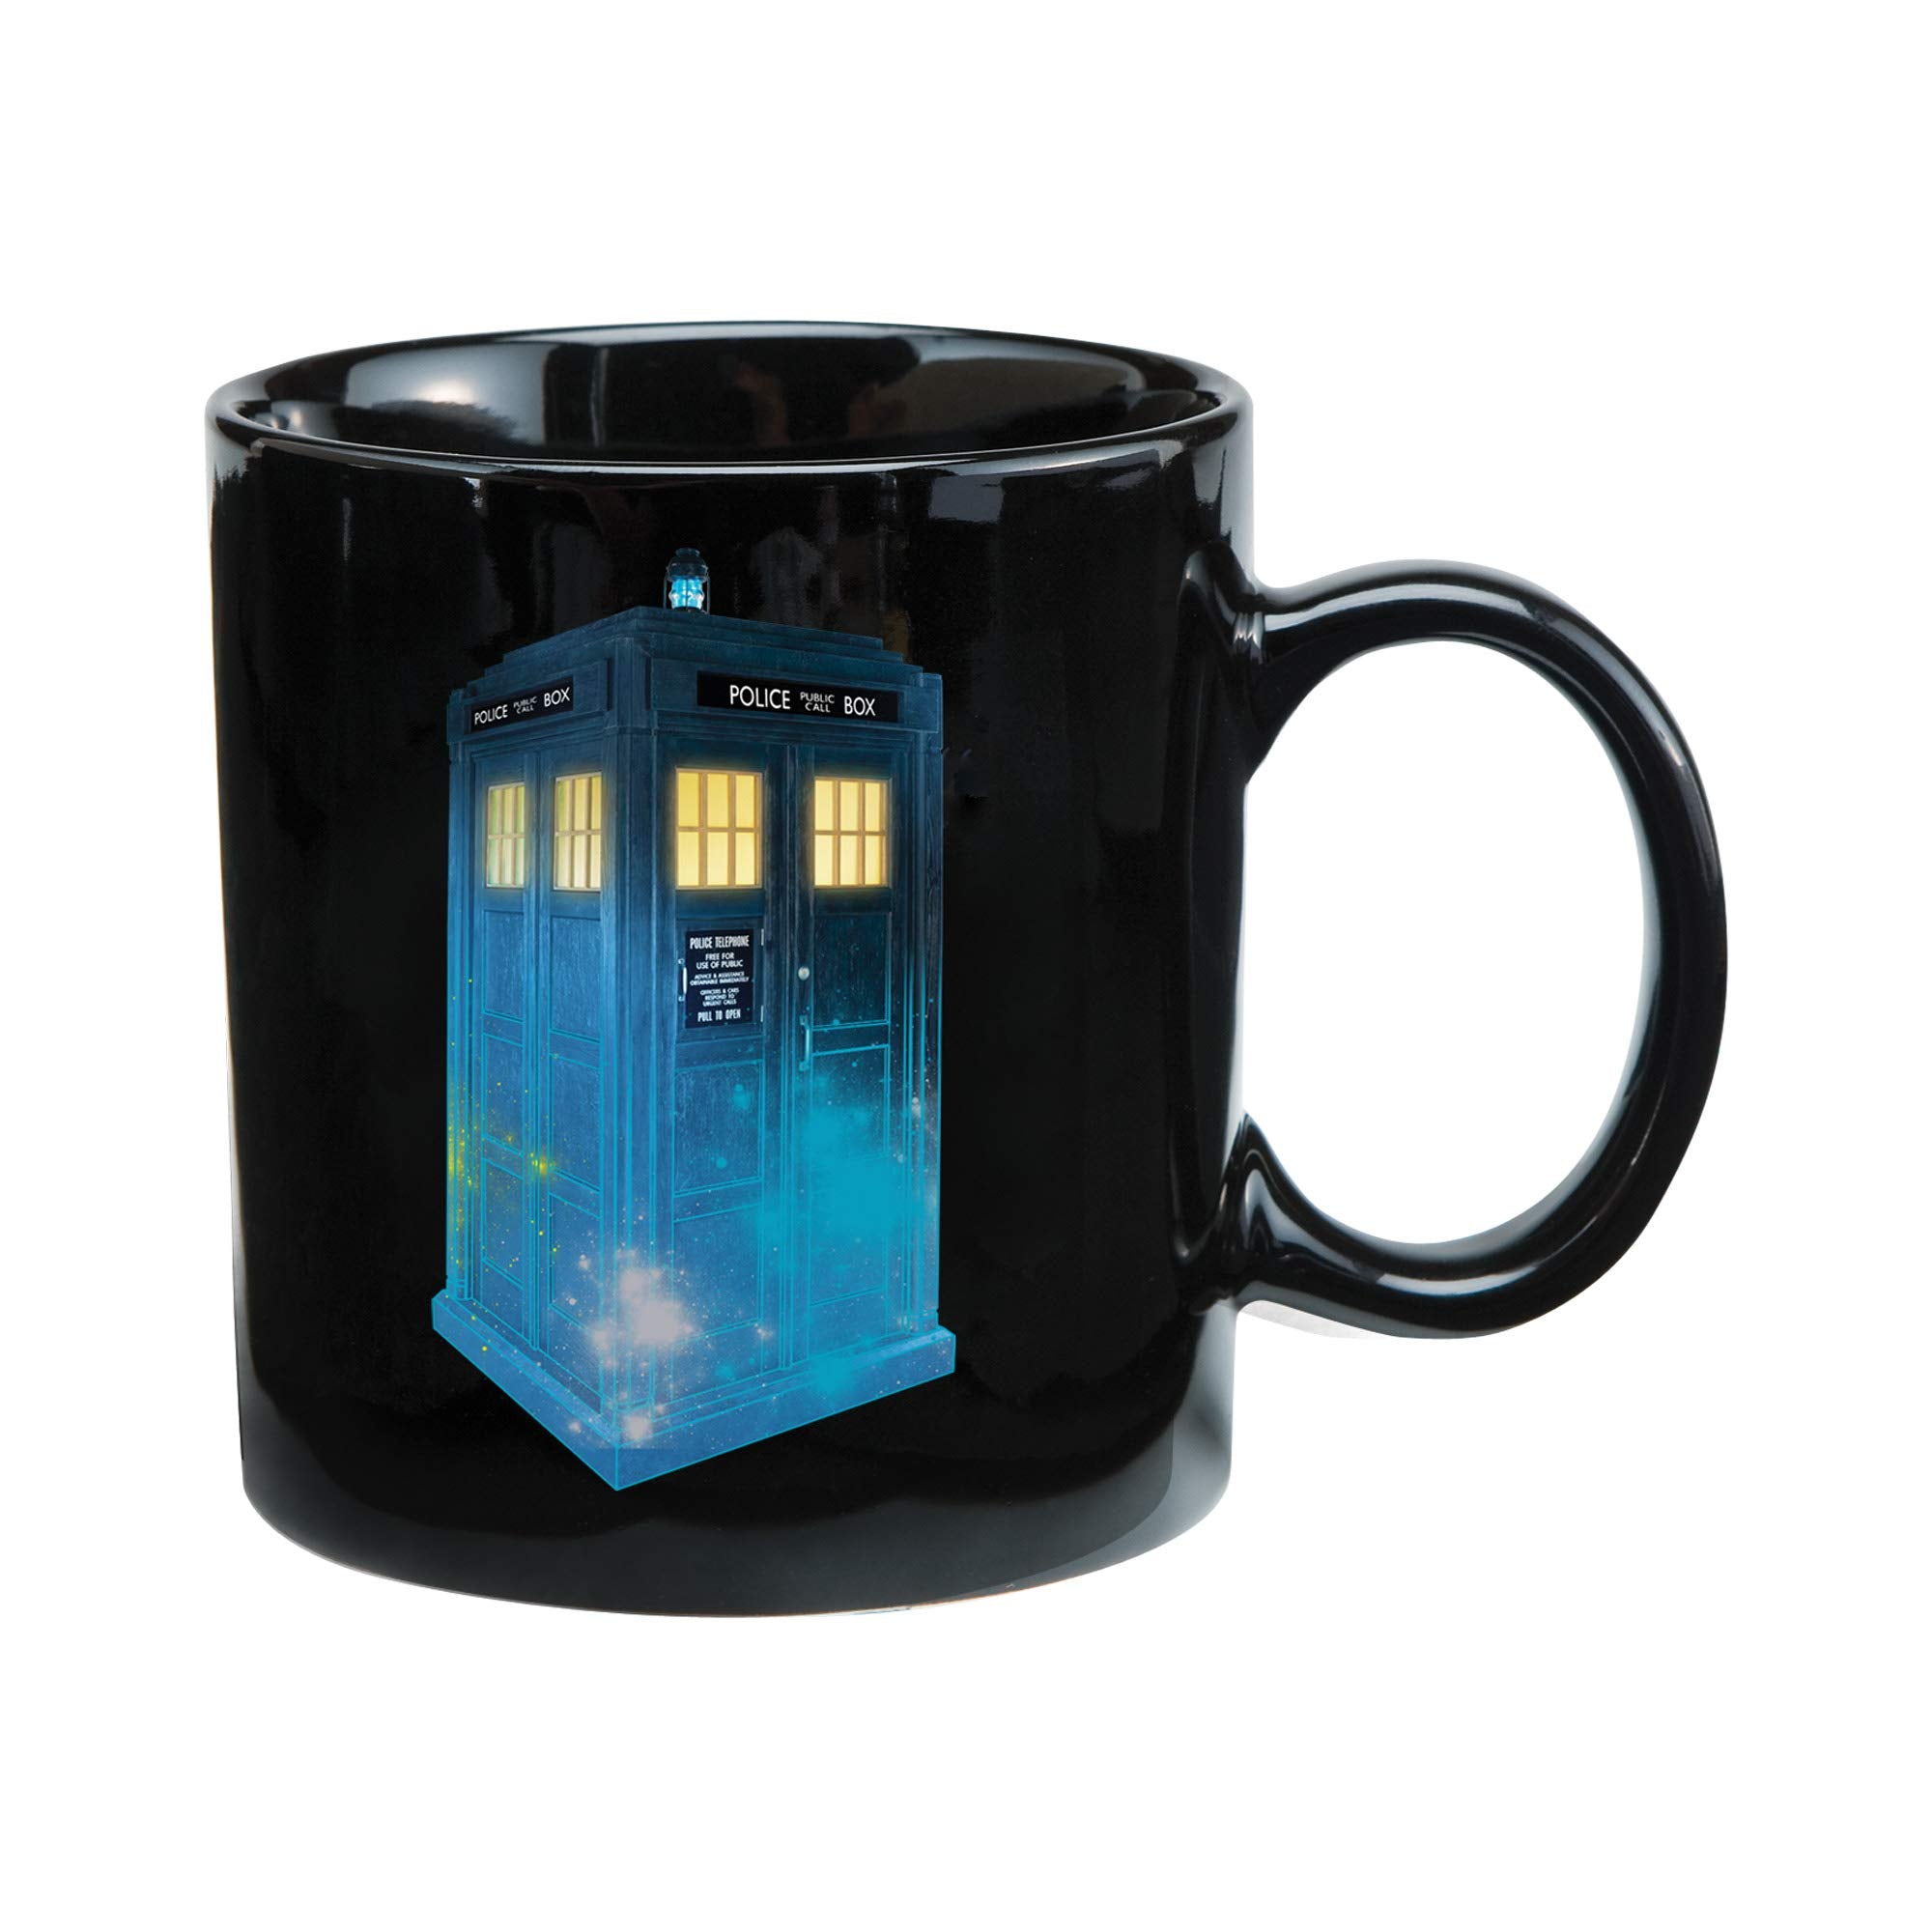 Doctor Who S11 Tardis Blue and Black 12 oz. Heat Reactive Ceramic Mug, Multicolored (56396)